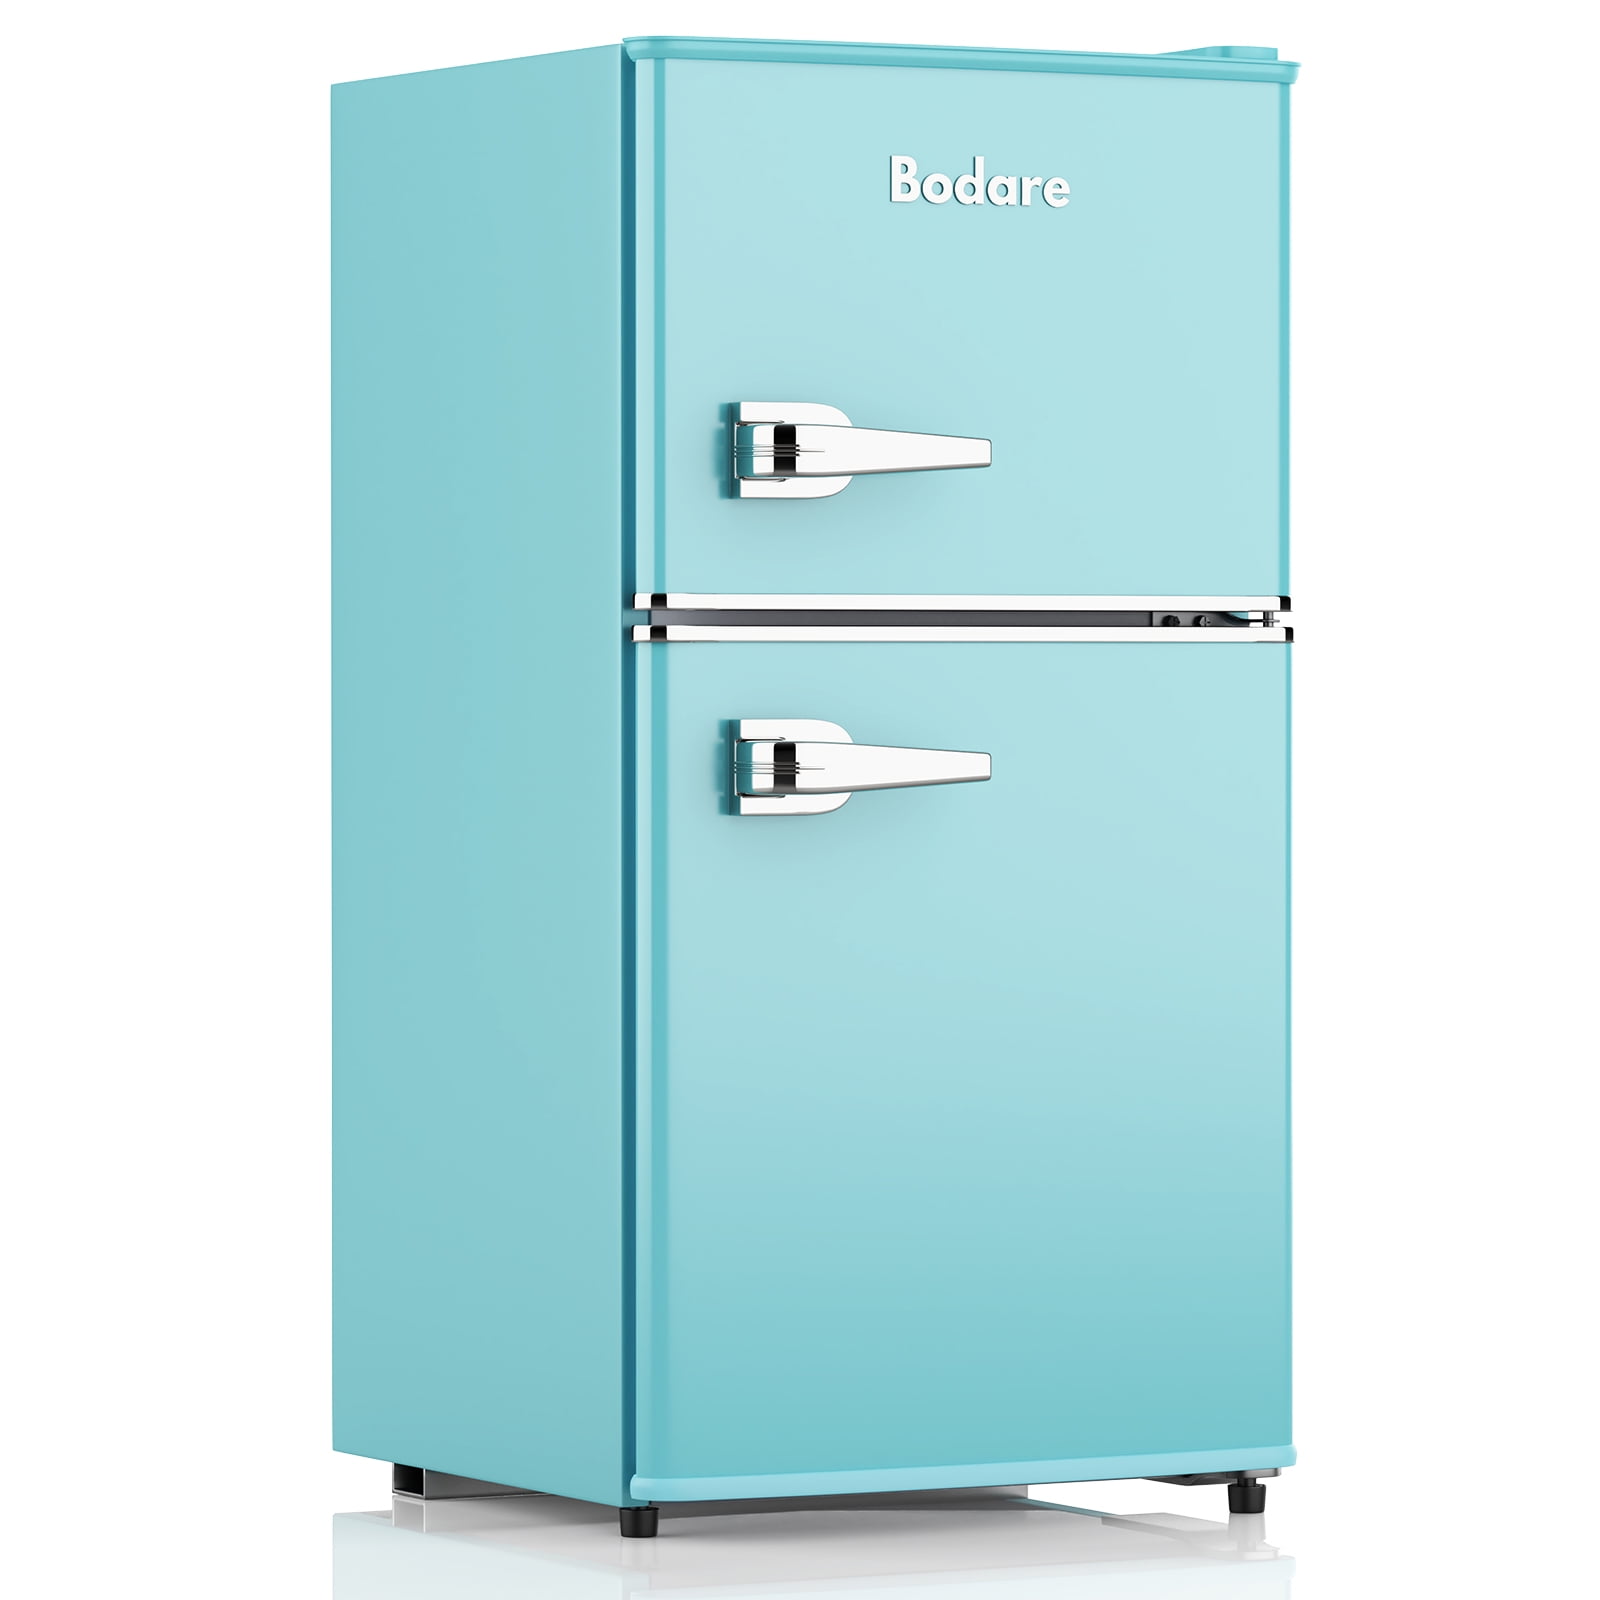 Bodare Retro Mini Fridge with Freezer: 3.2 Cu.Ft Mini Refrigerator with 2  Doors - Small Refrigerator Energy-Saving Compact Refrigerator - Small Fridge  for Bedroom Dorm,Blue 